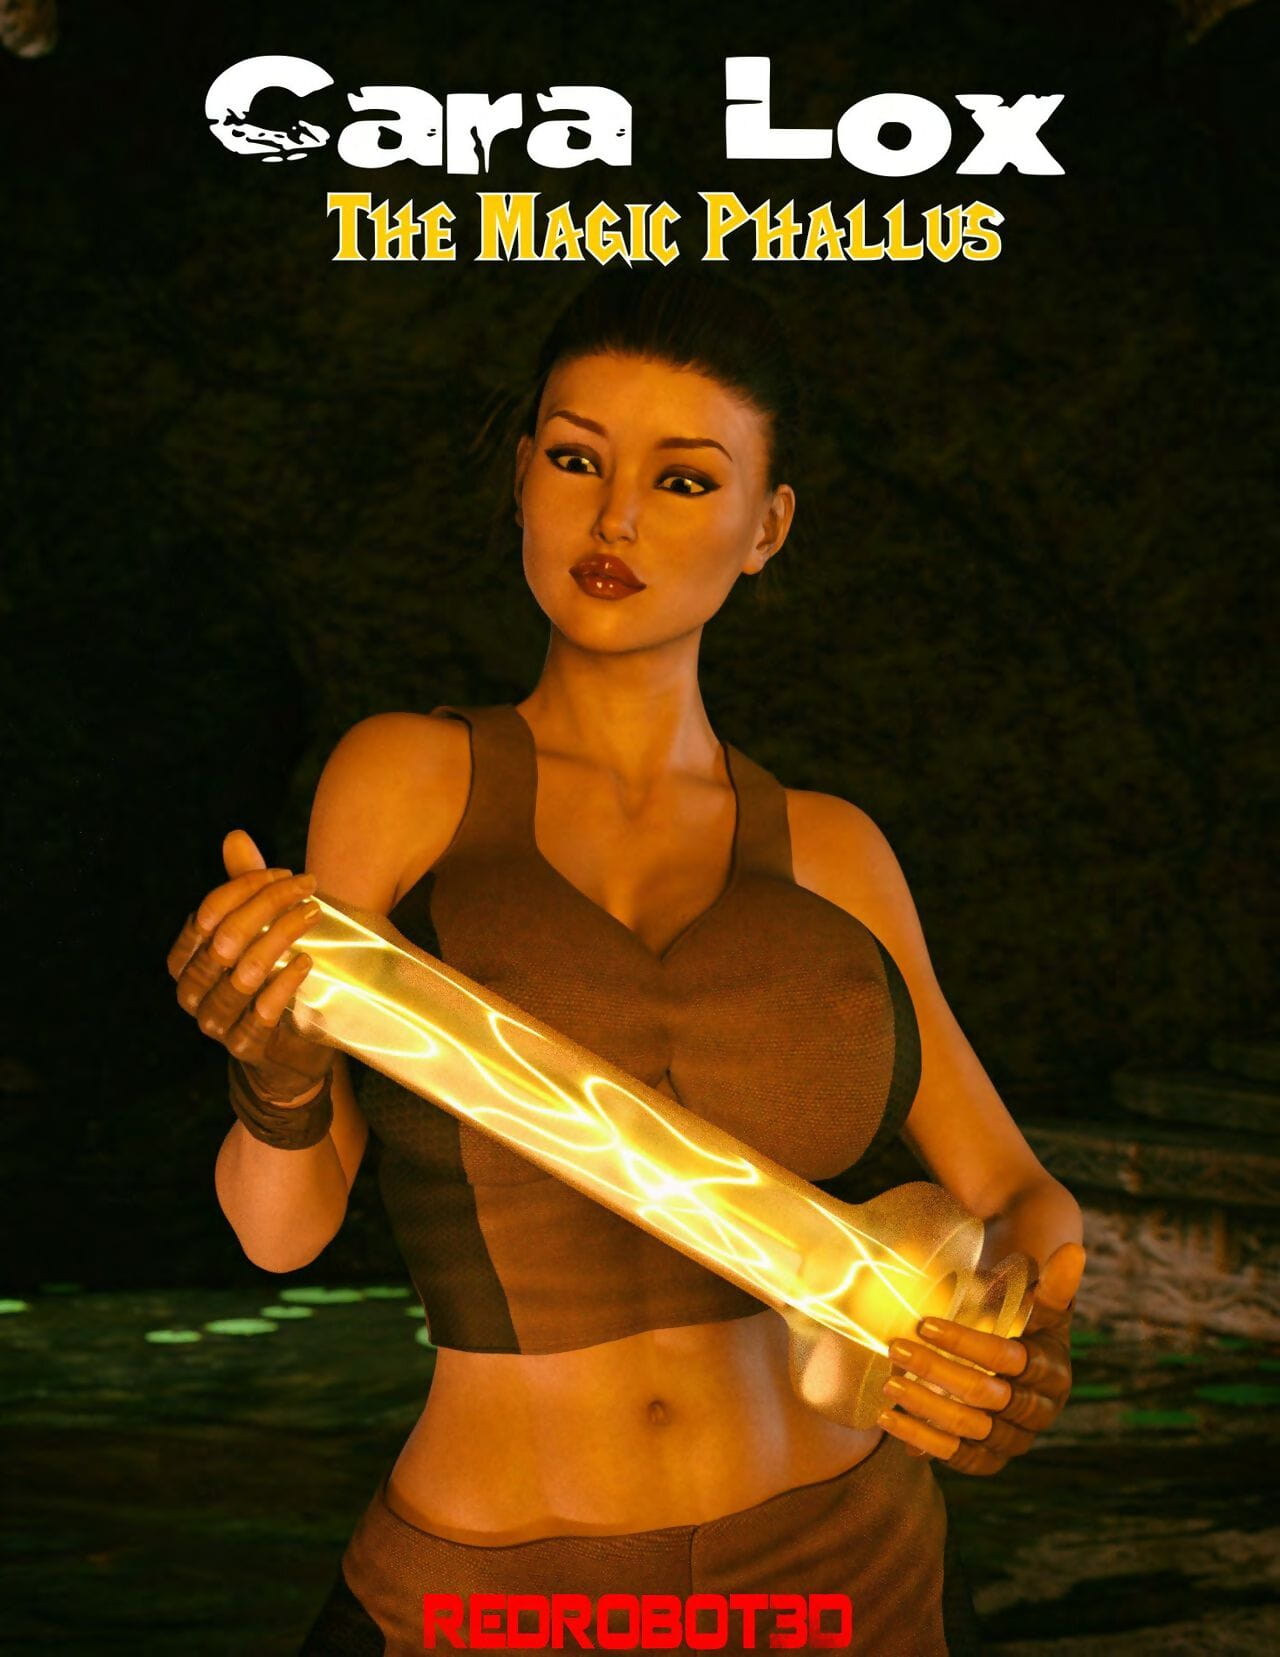 कारा lox जादू phallus page 1